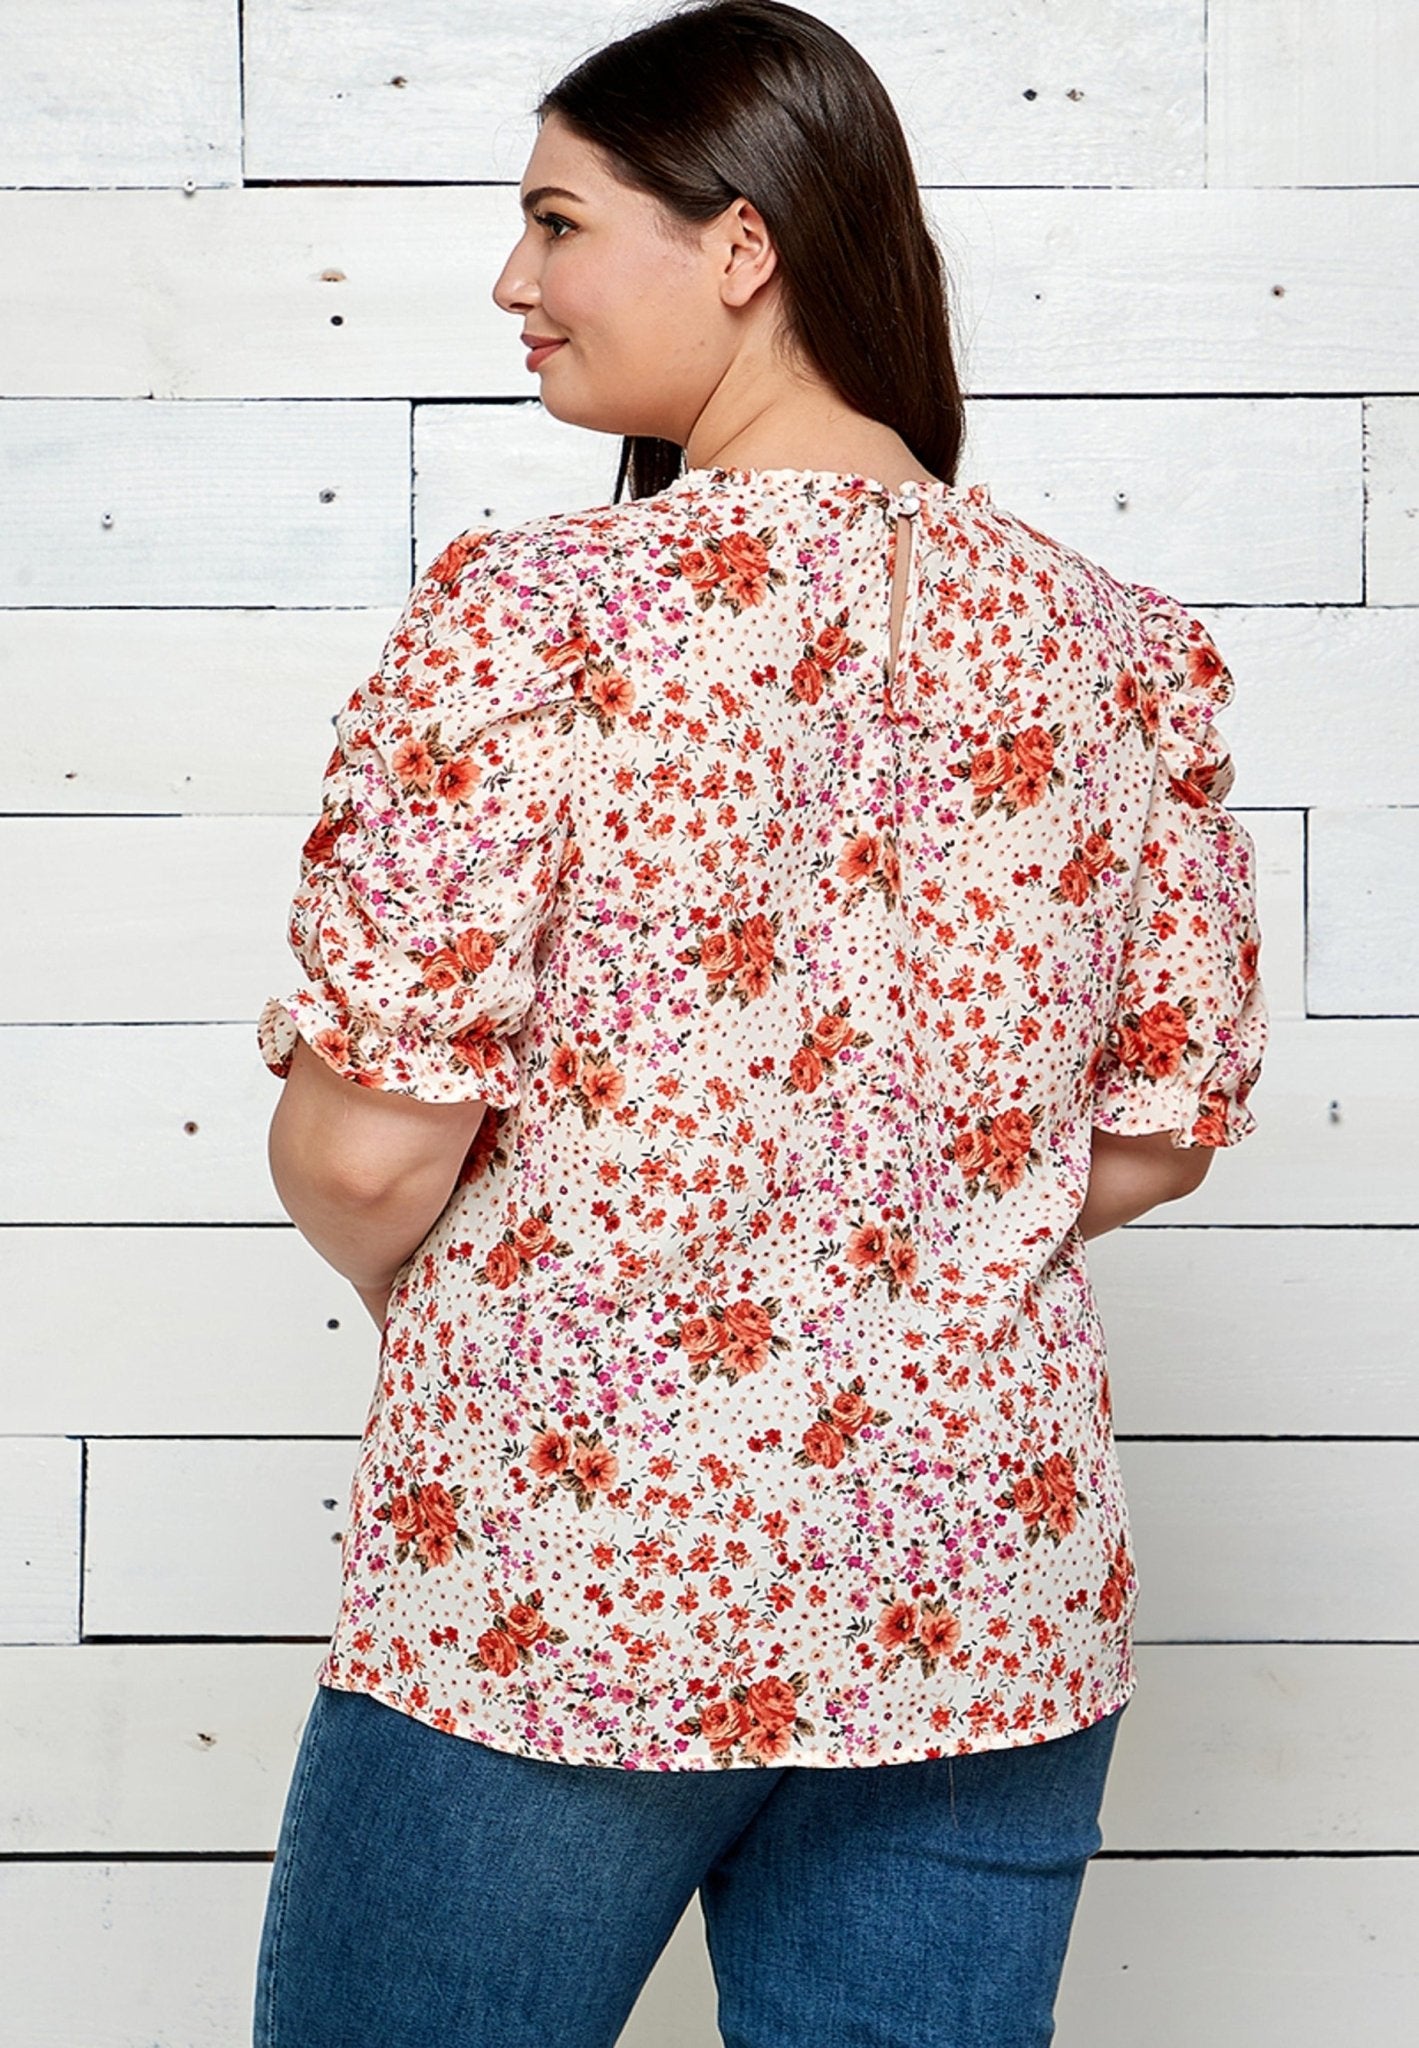 Sara Michelle Short Sleeve Georgette Print Blouse - Plus - DressbarnShirts & Blouses